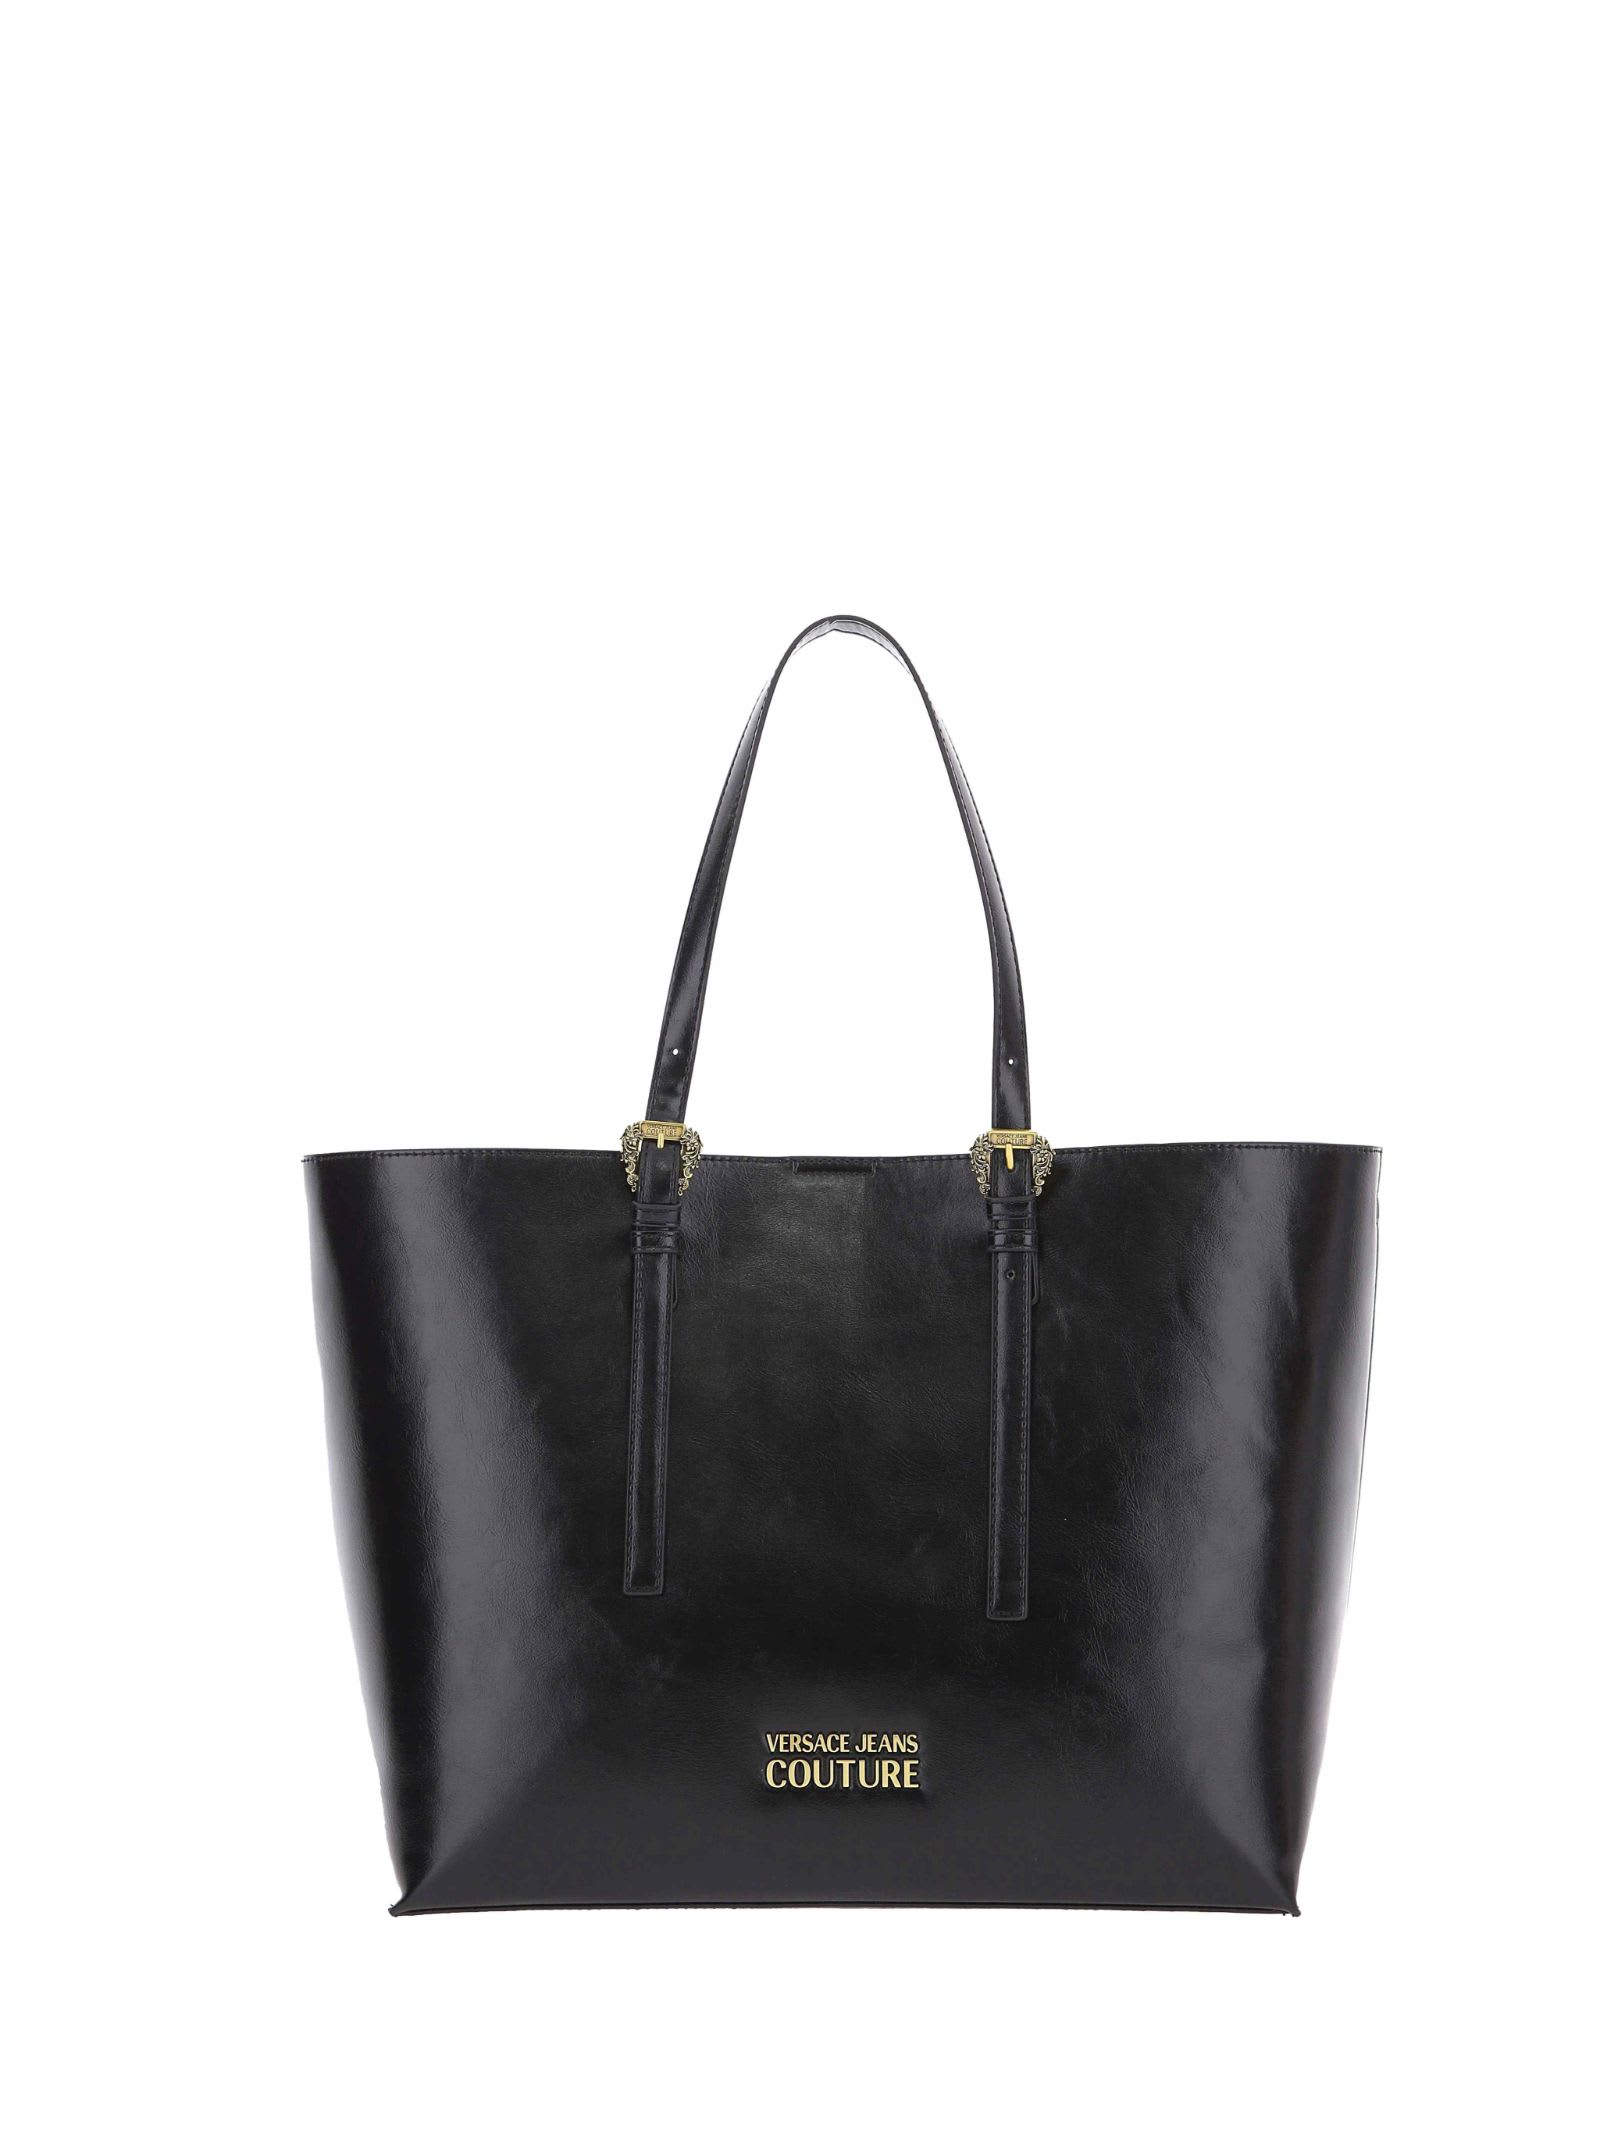 Versace Jeans Couture Chiara Ferragni Bag